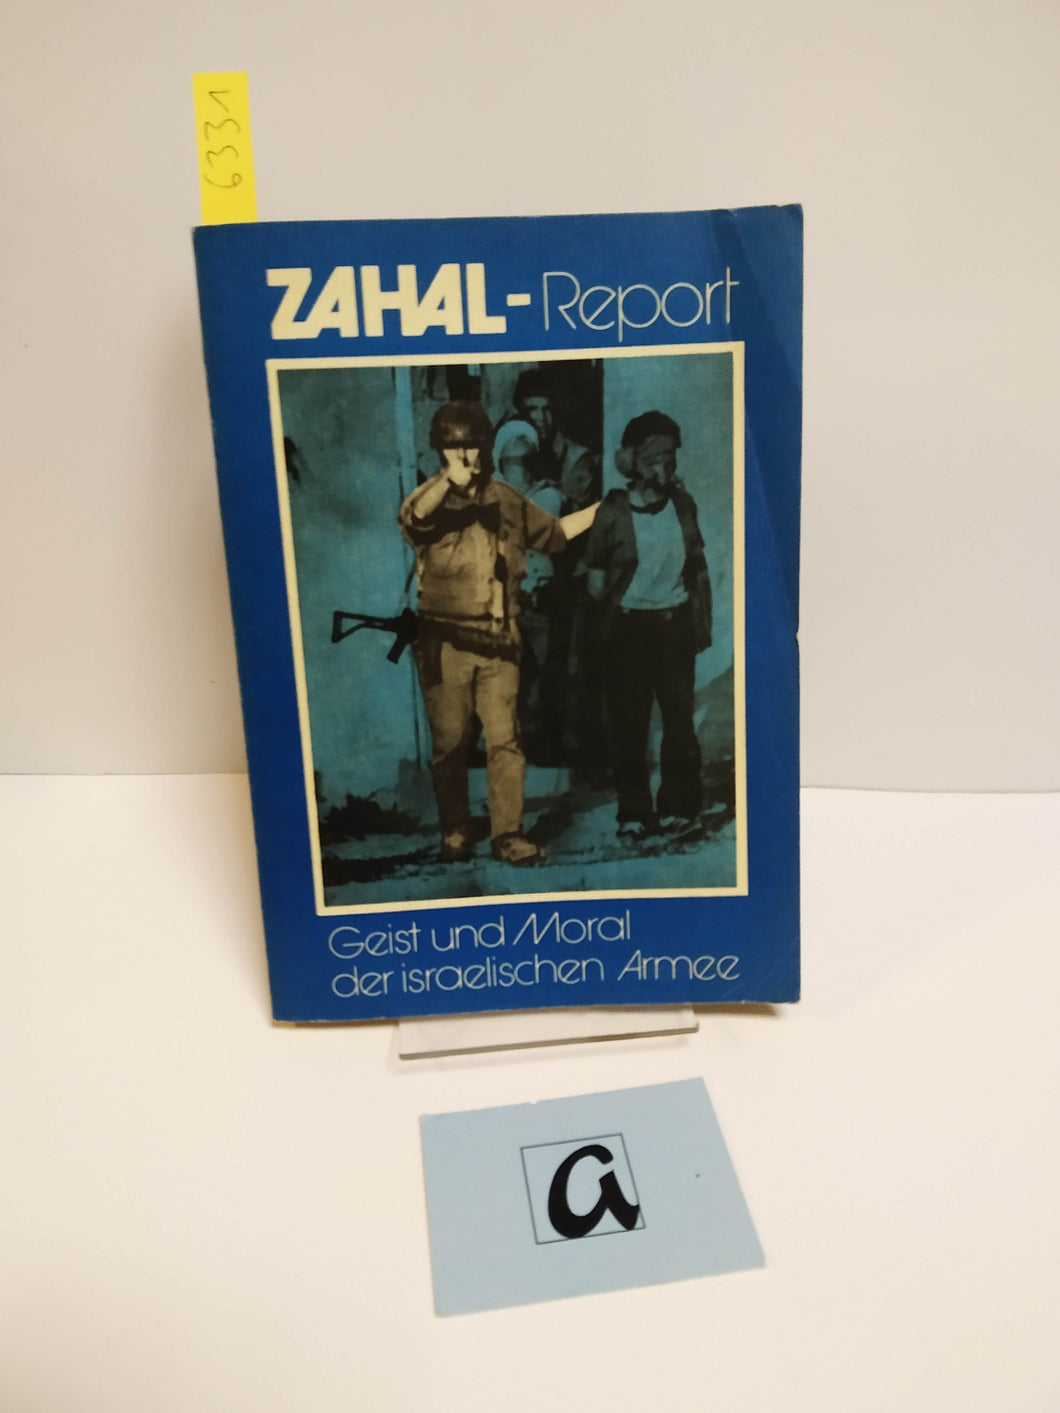 Zahal-Report